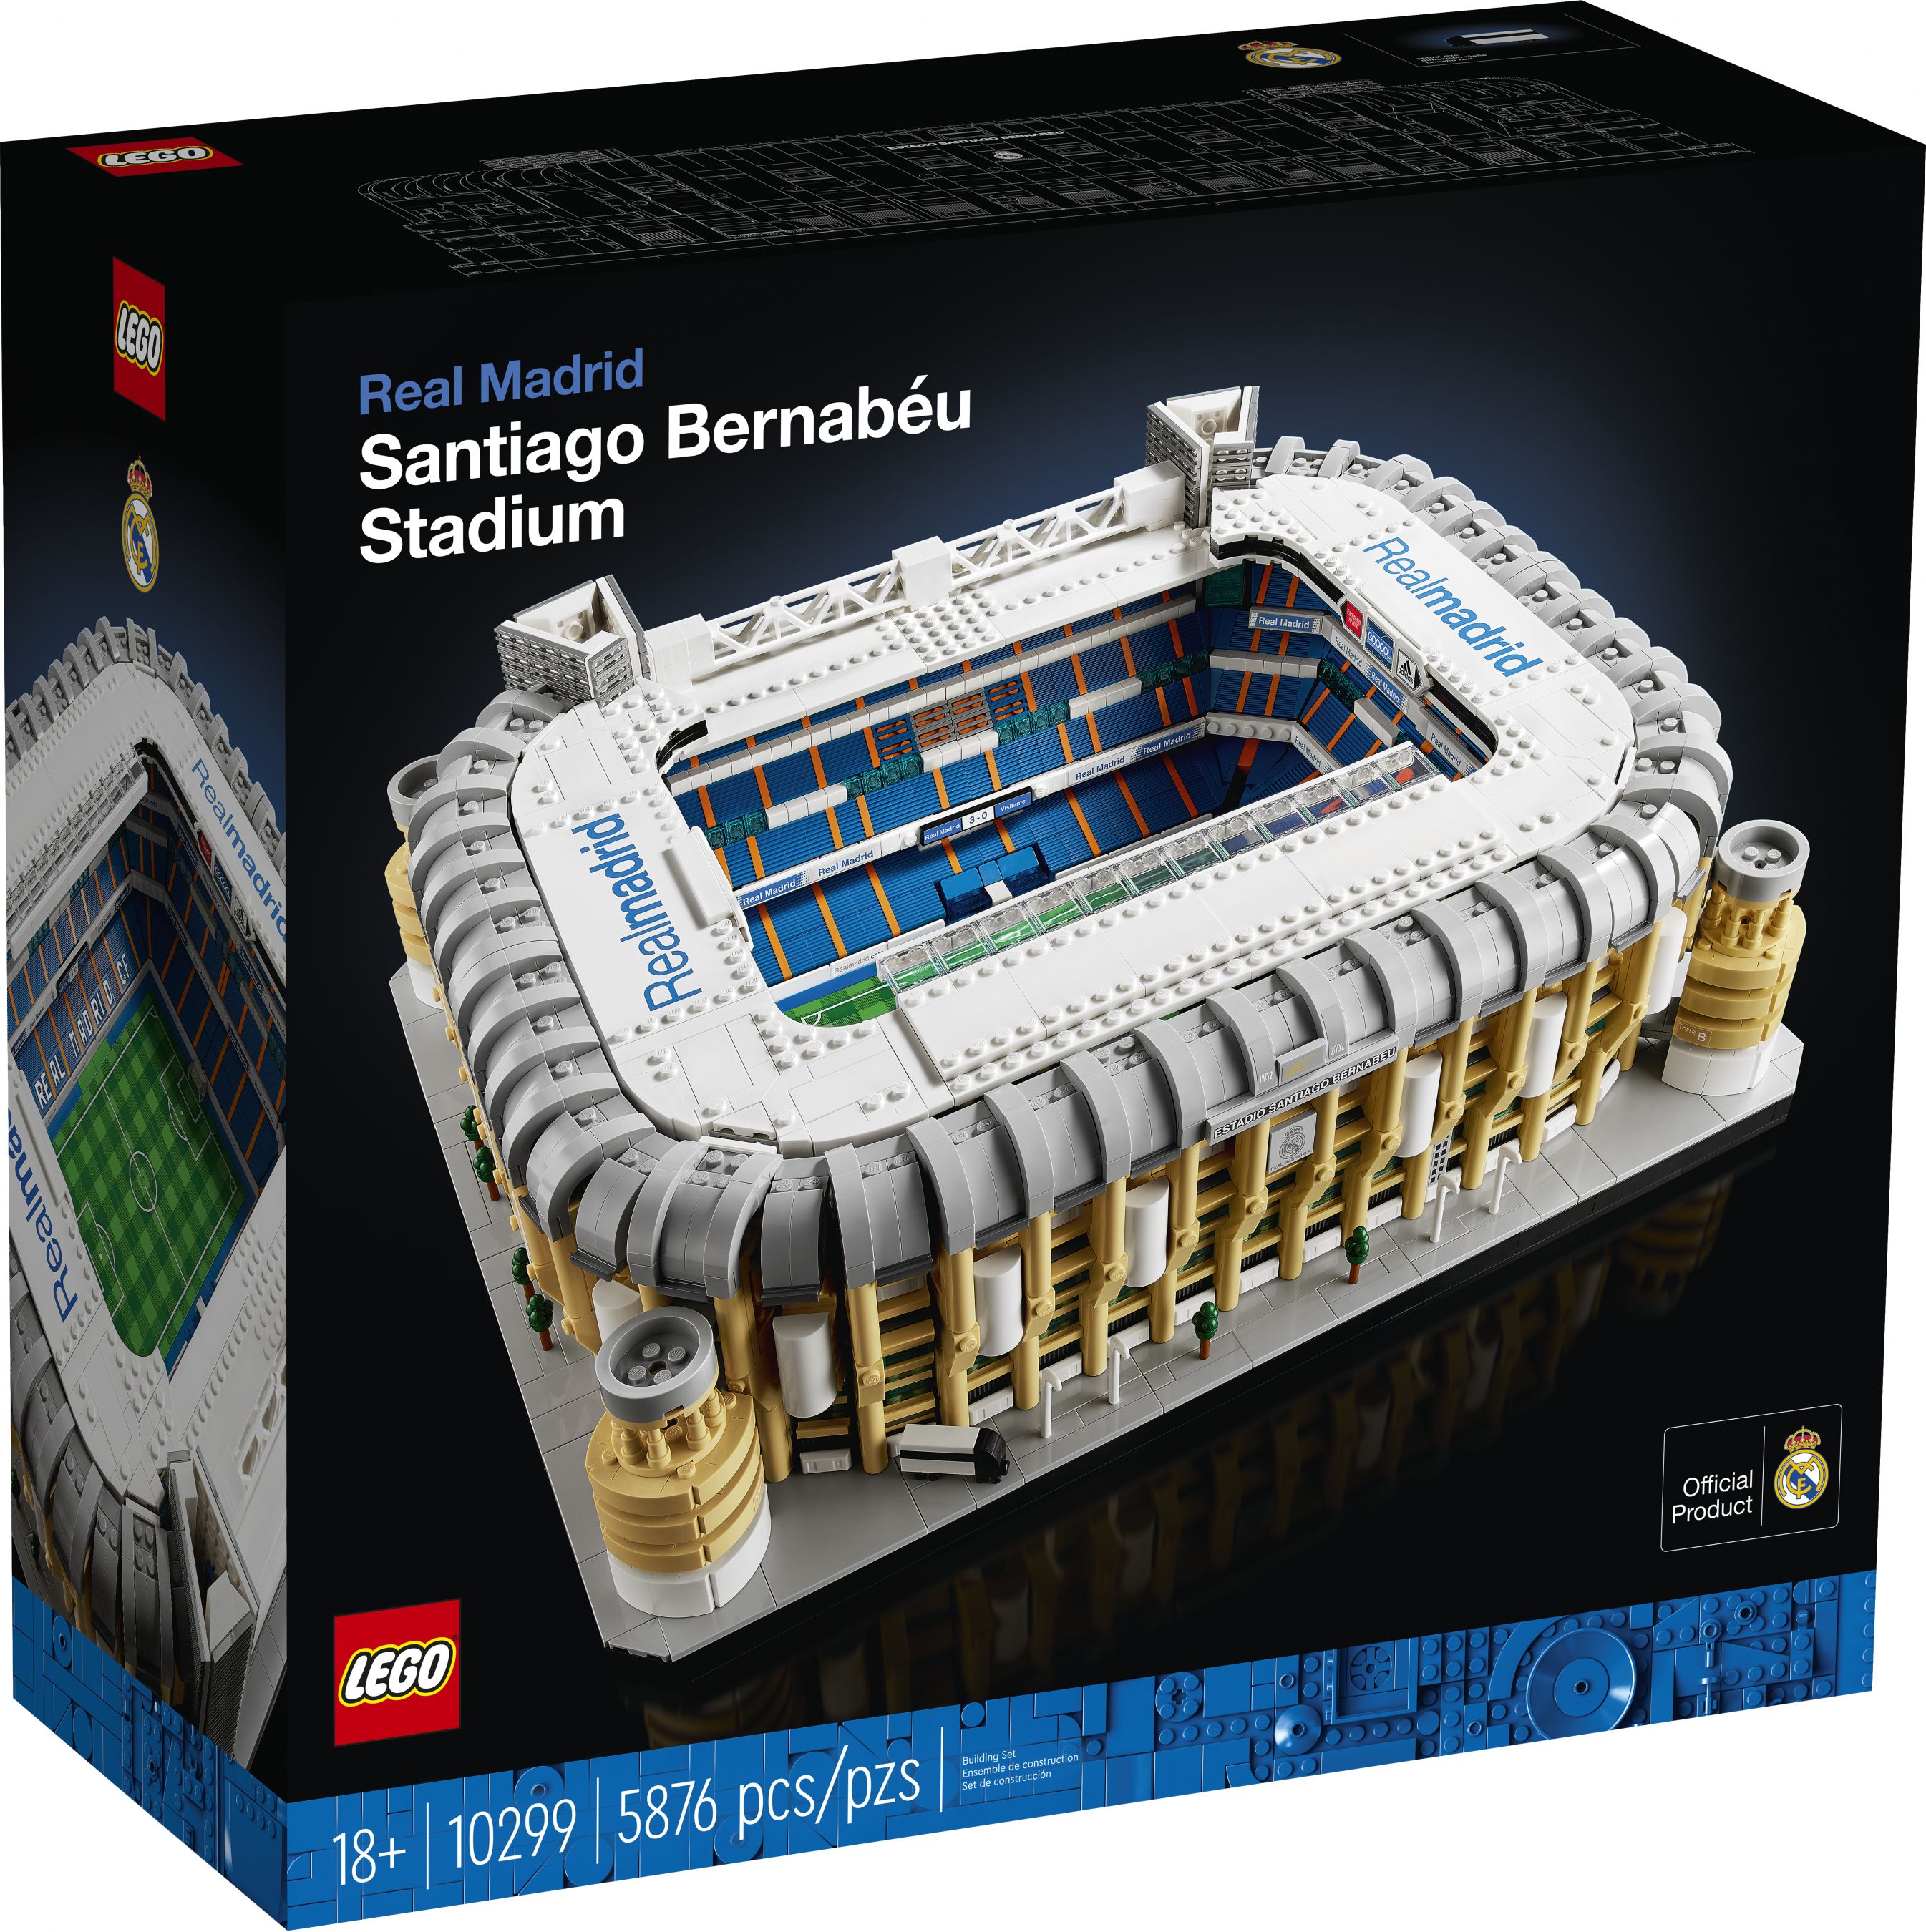 LEGO Advanced Models 10299 Real Madrid - Santiago Bernabéu Stadion LEGO_10299_Box1_v39.jpg